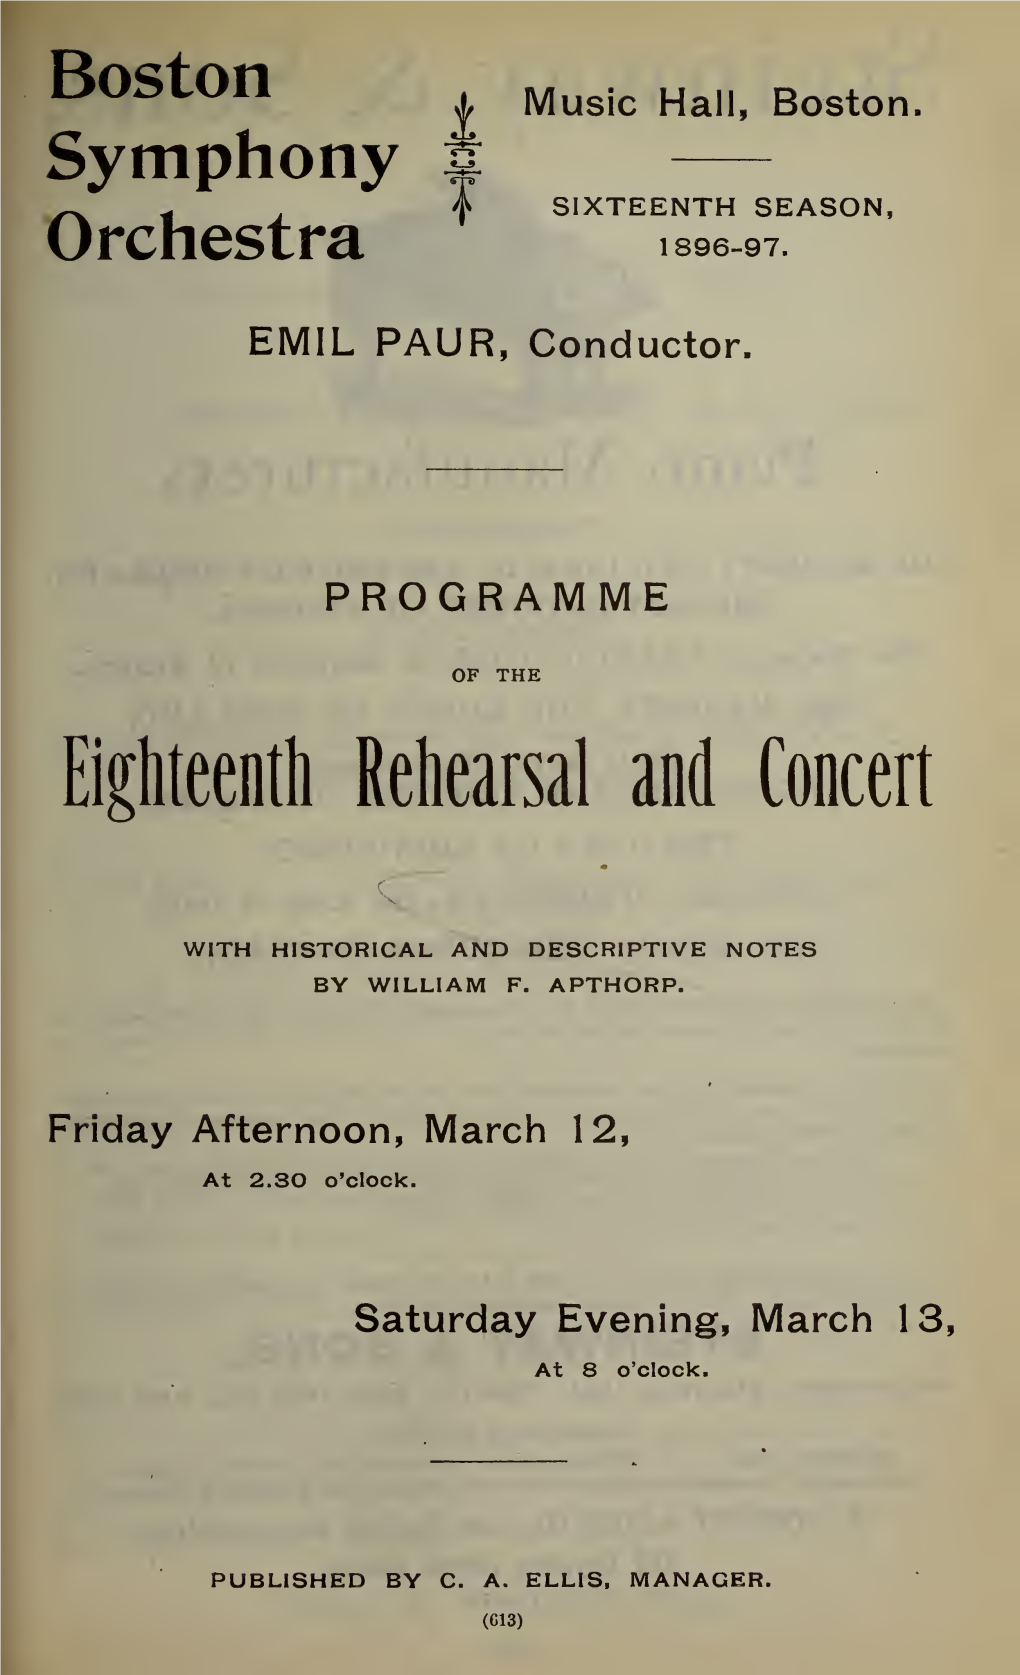 Boston Symphony Orchestra Concert Programs, Season 16, 1896